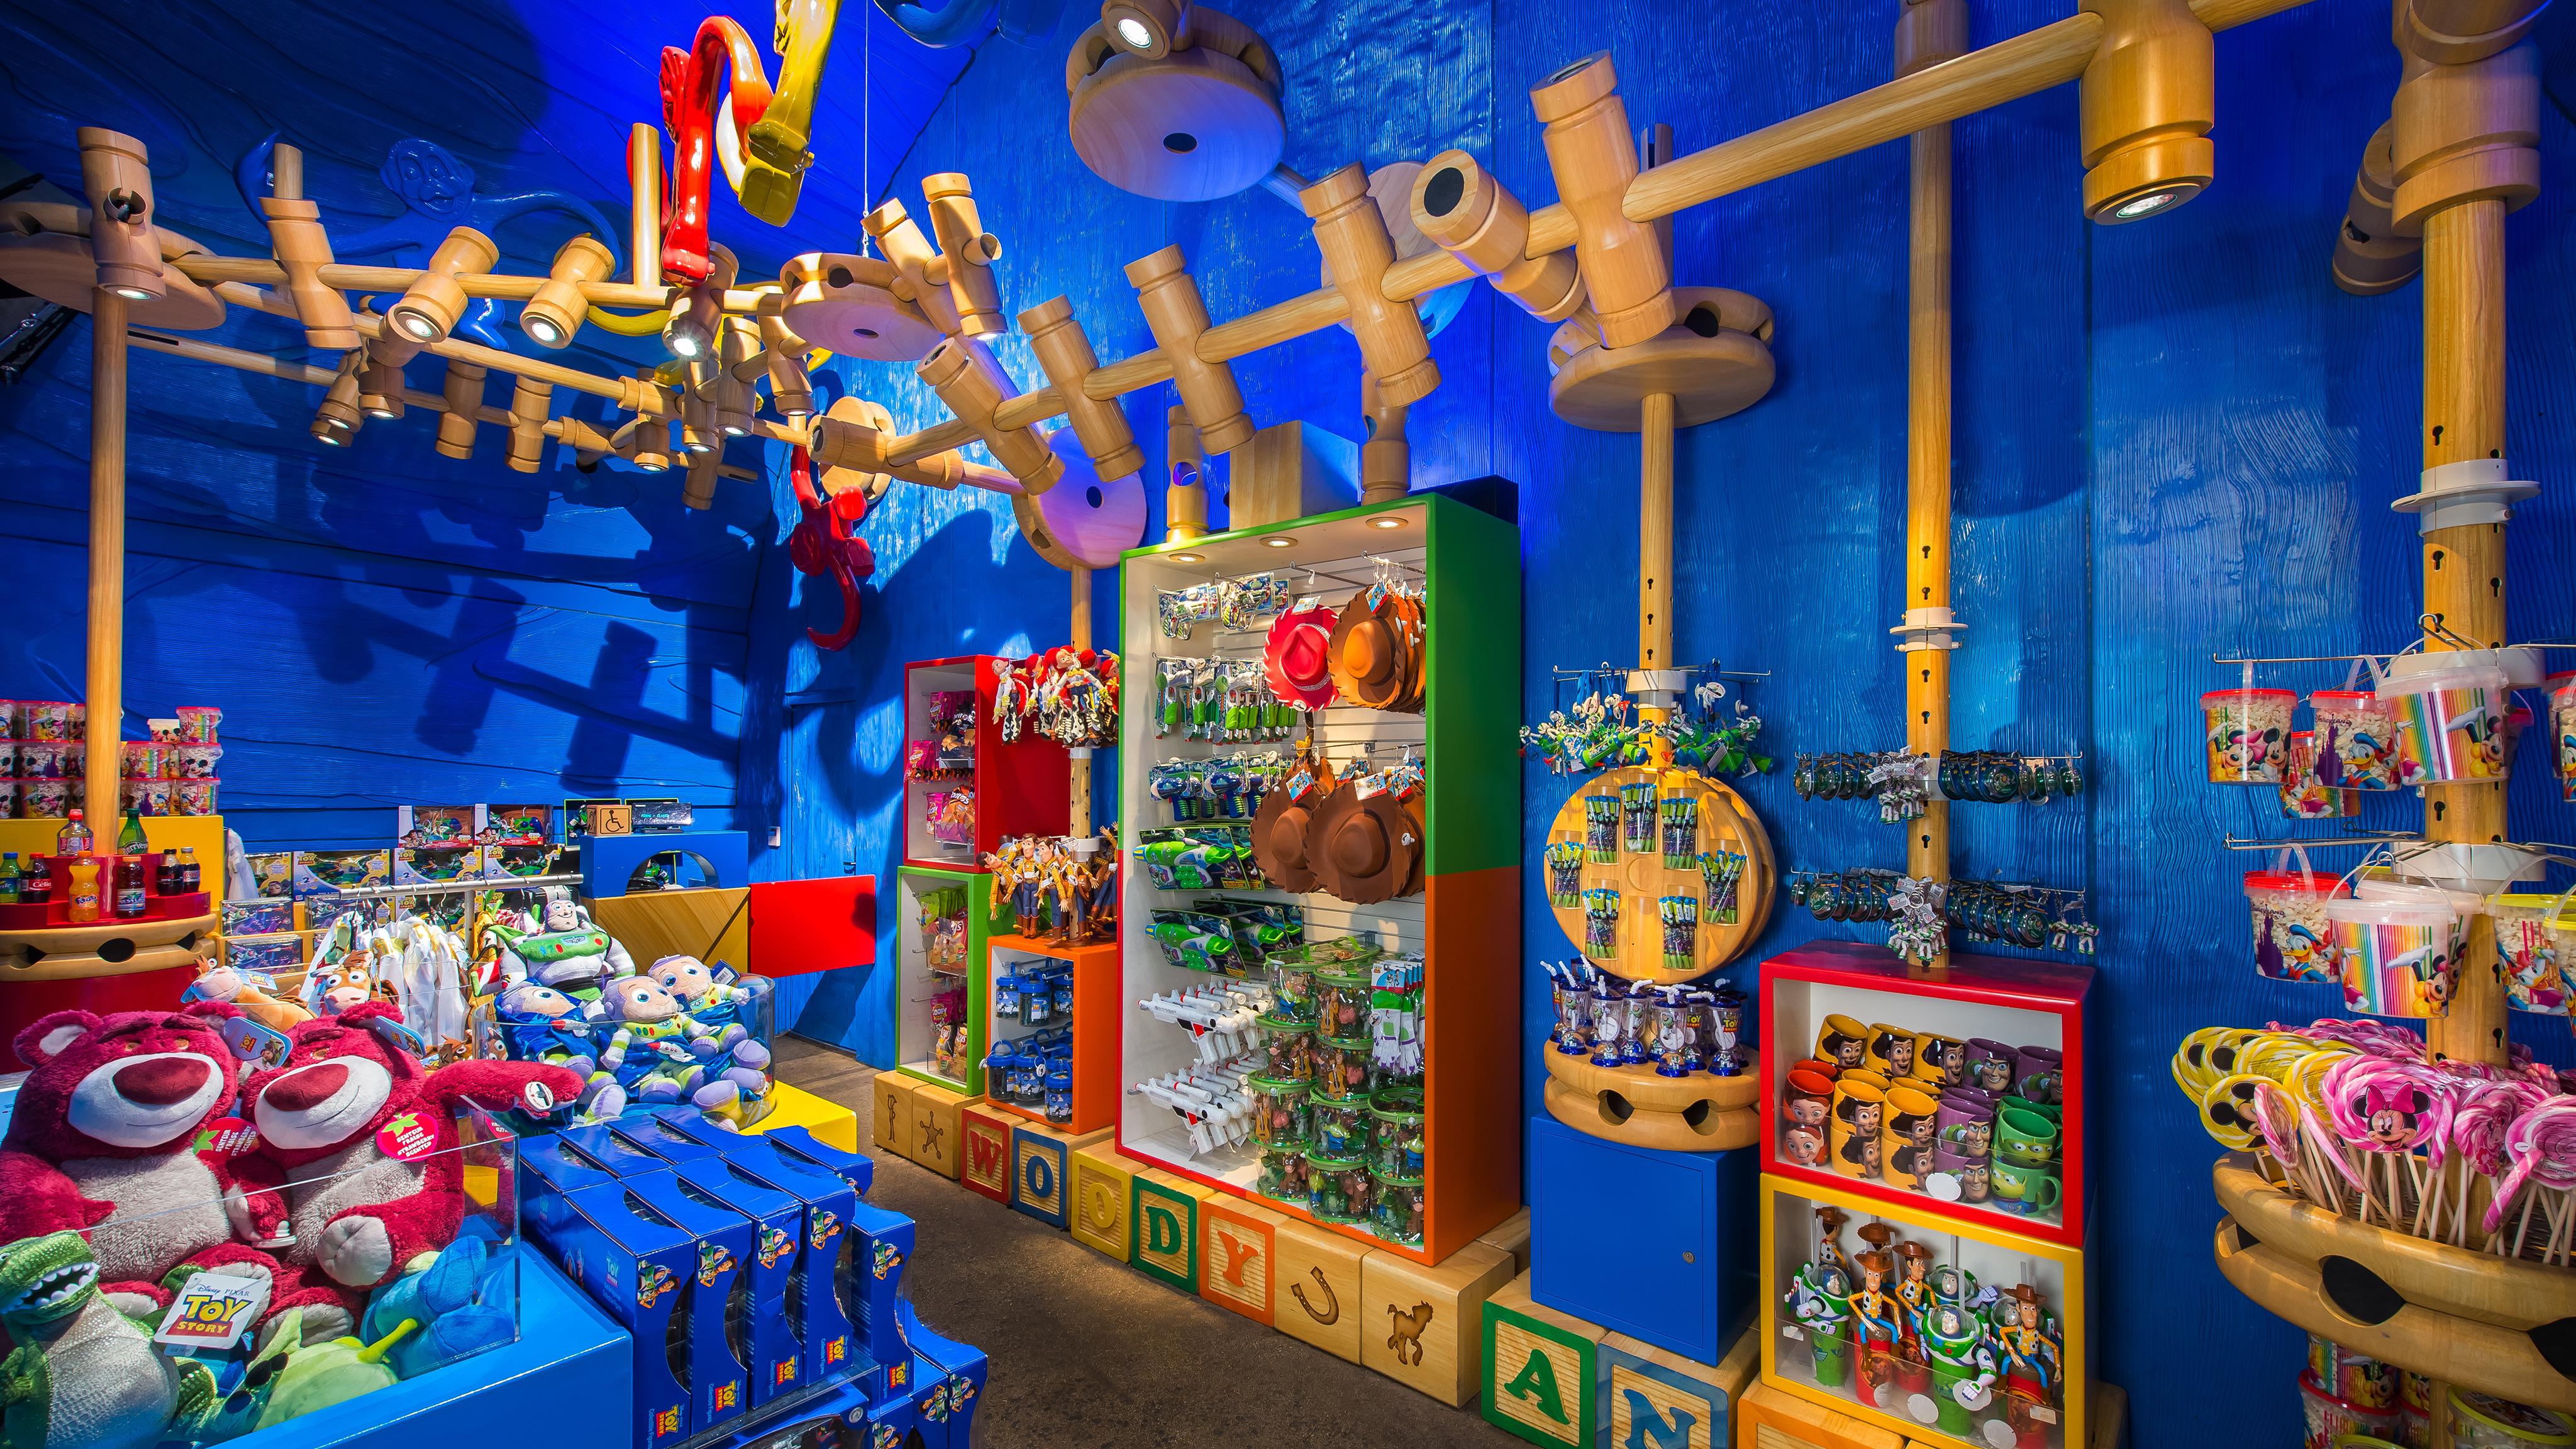 Visiter la boutique DisneyDisney Onesie Fille Toy Story 